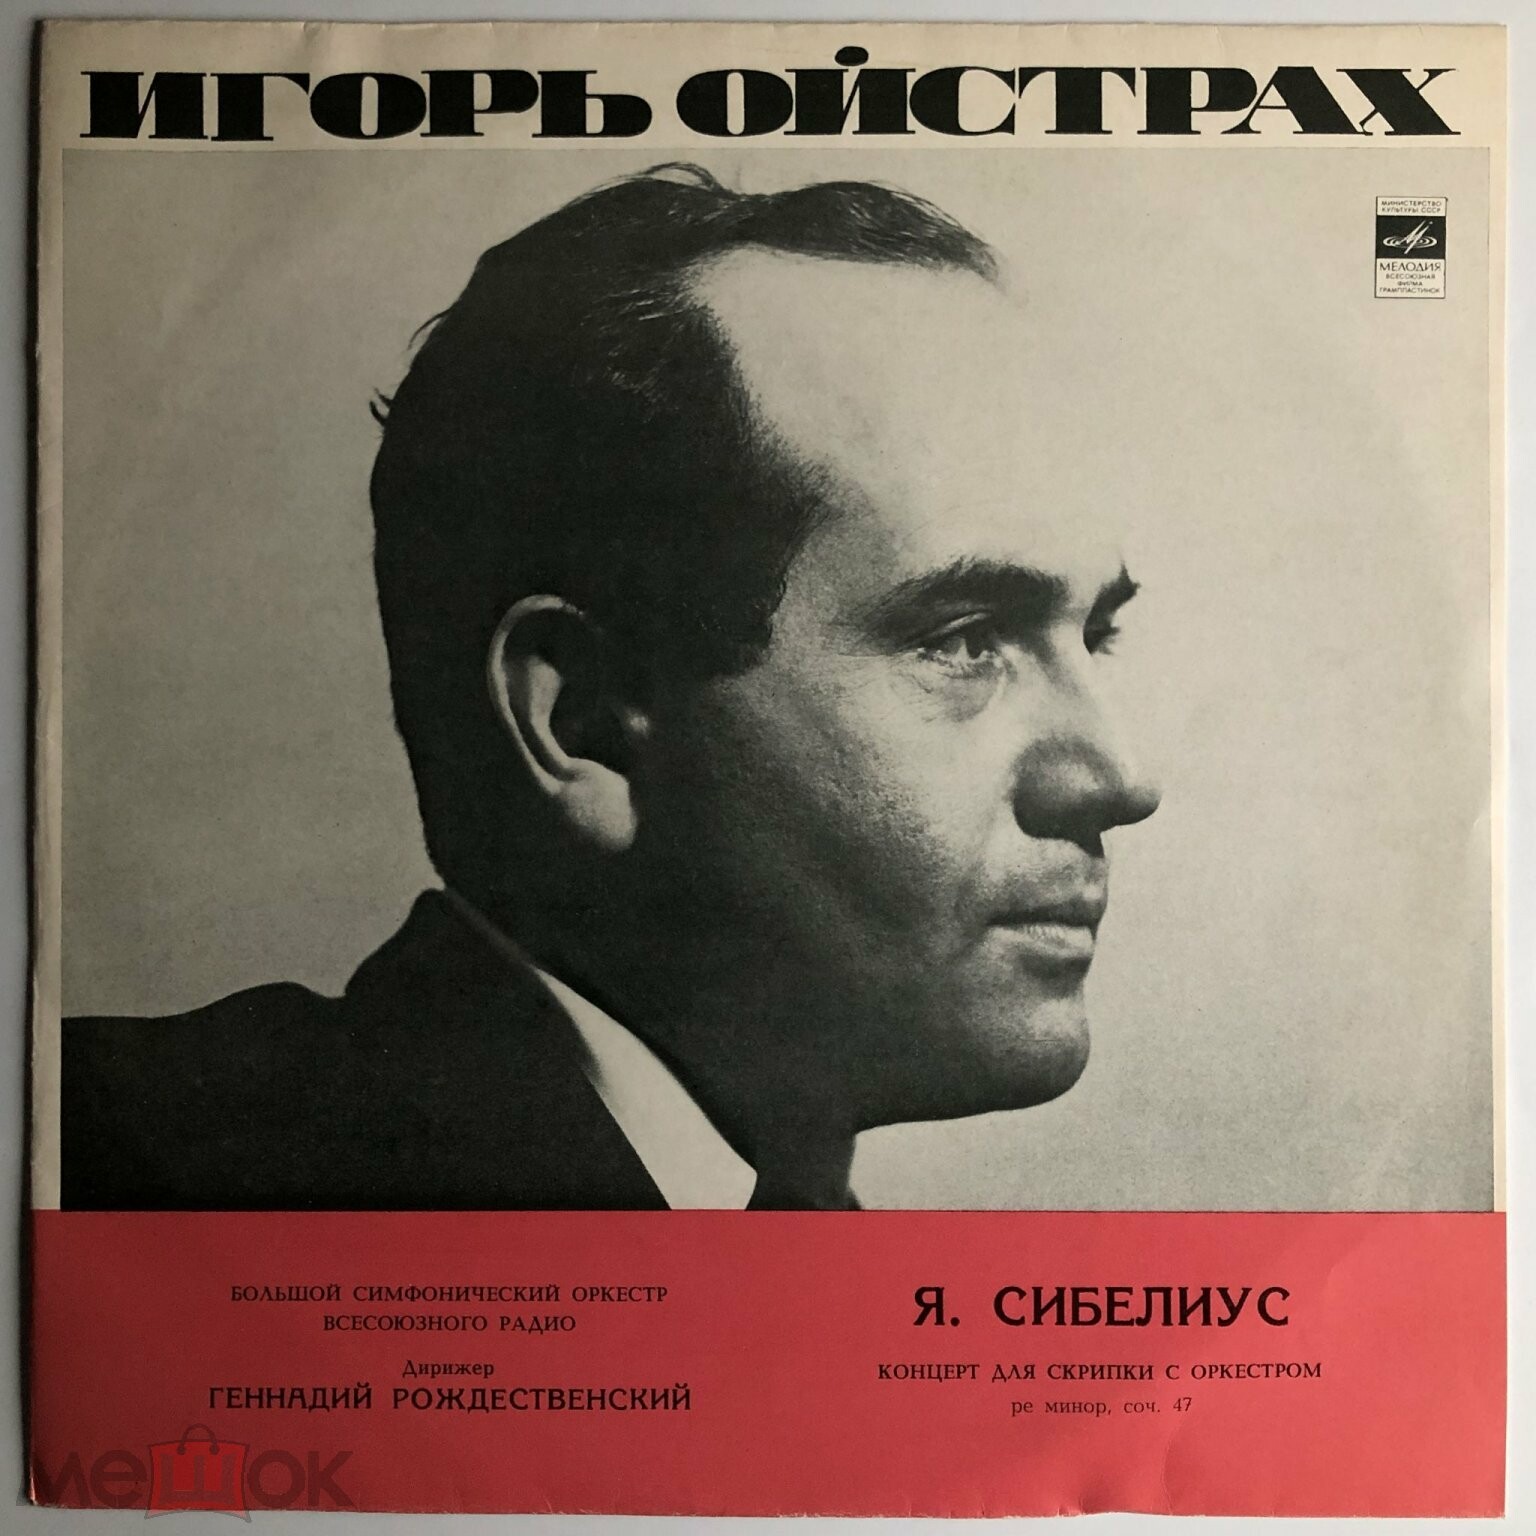 Я. СИБЕЛИУС (1865— 1957): Концерт для скрипки с оркестром